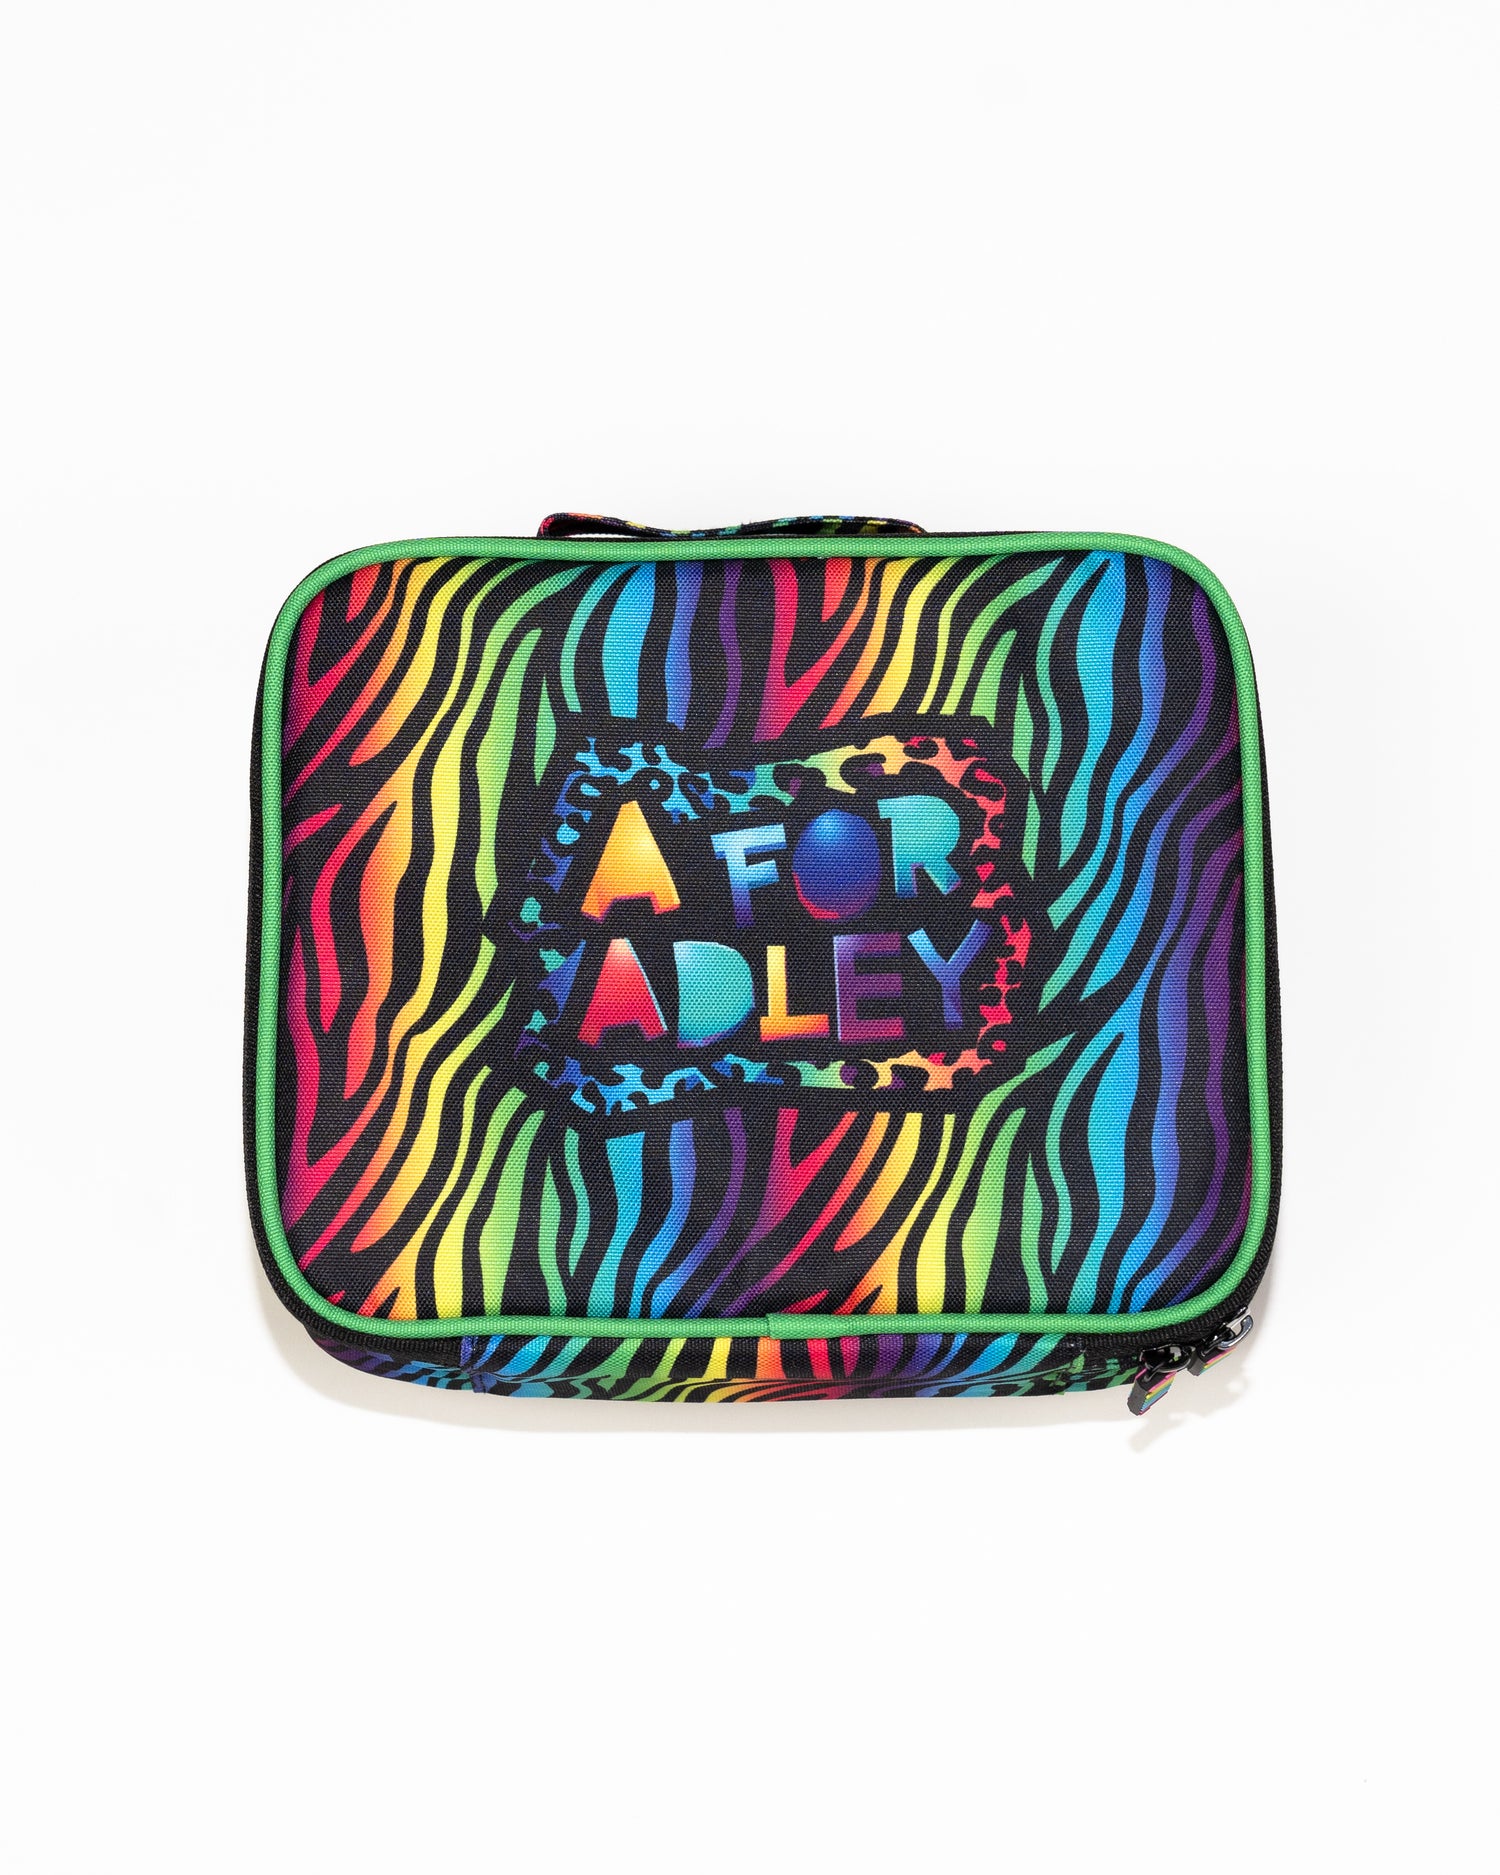 Adley's Neon Rainbow Lunchbox